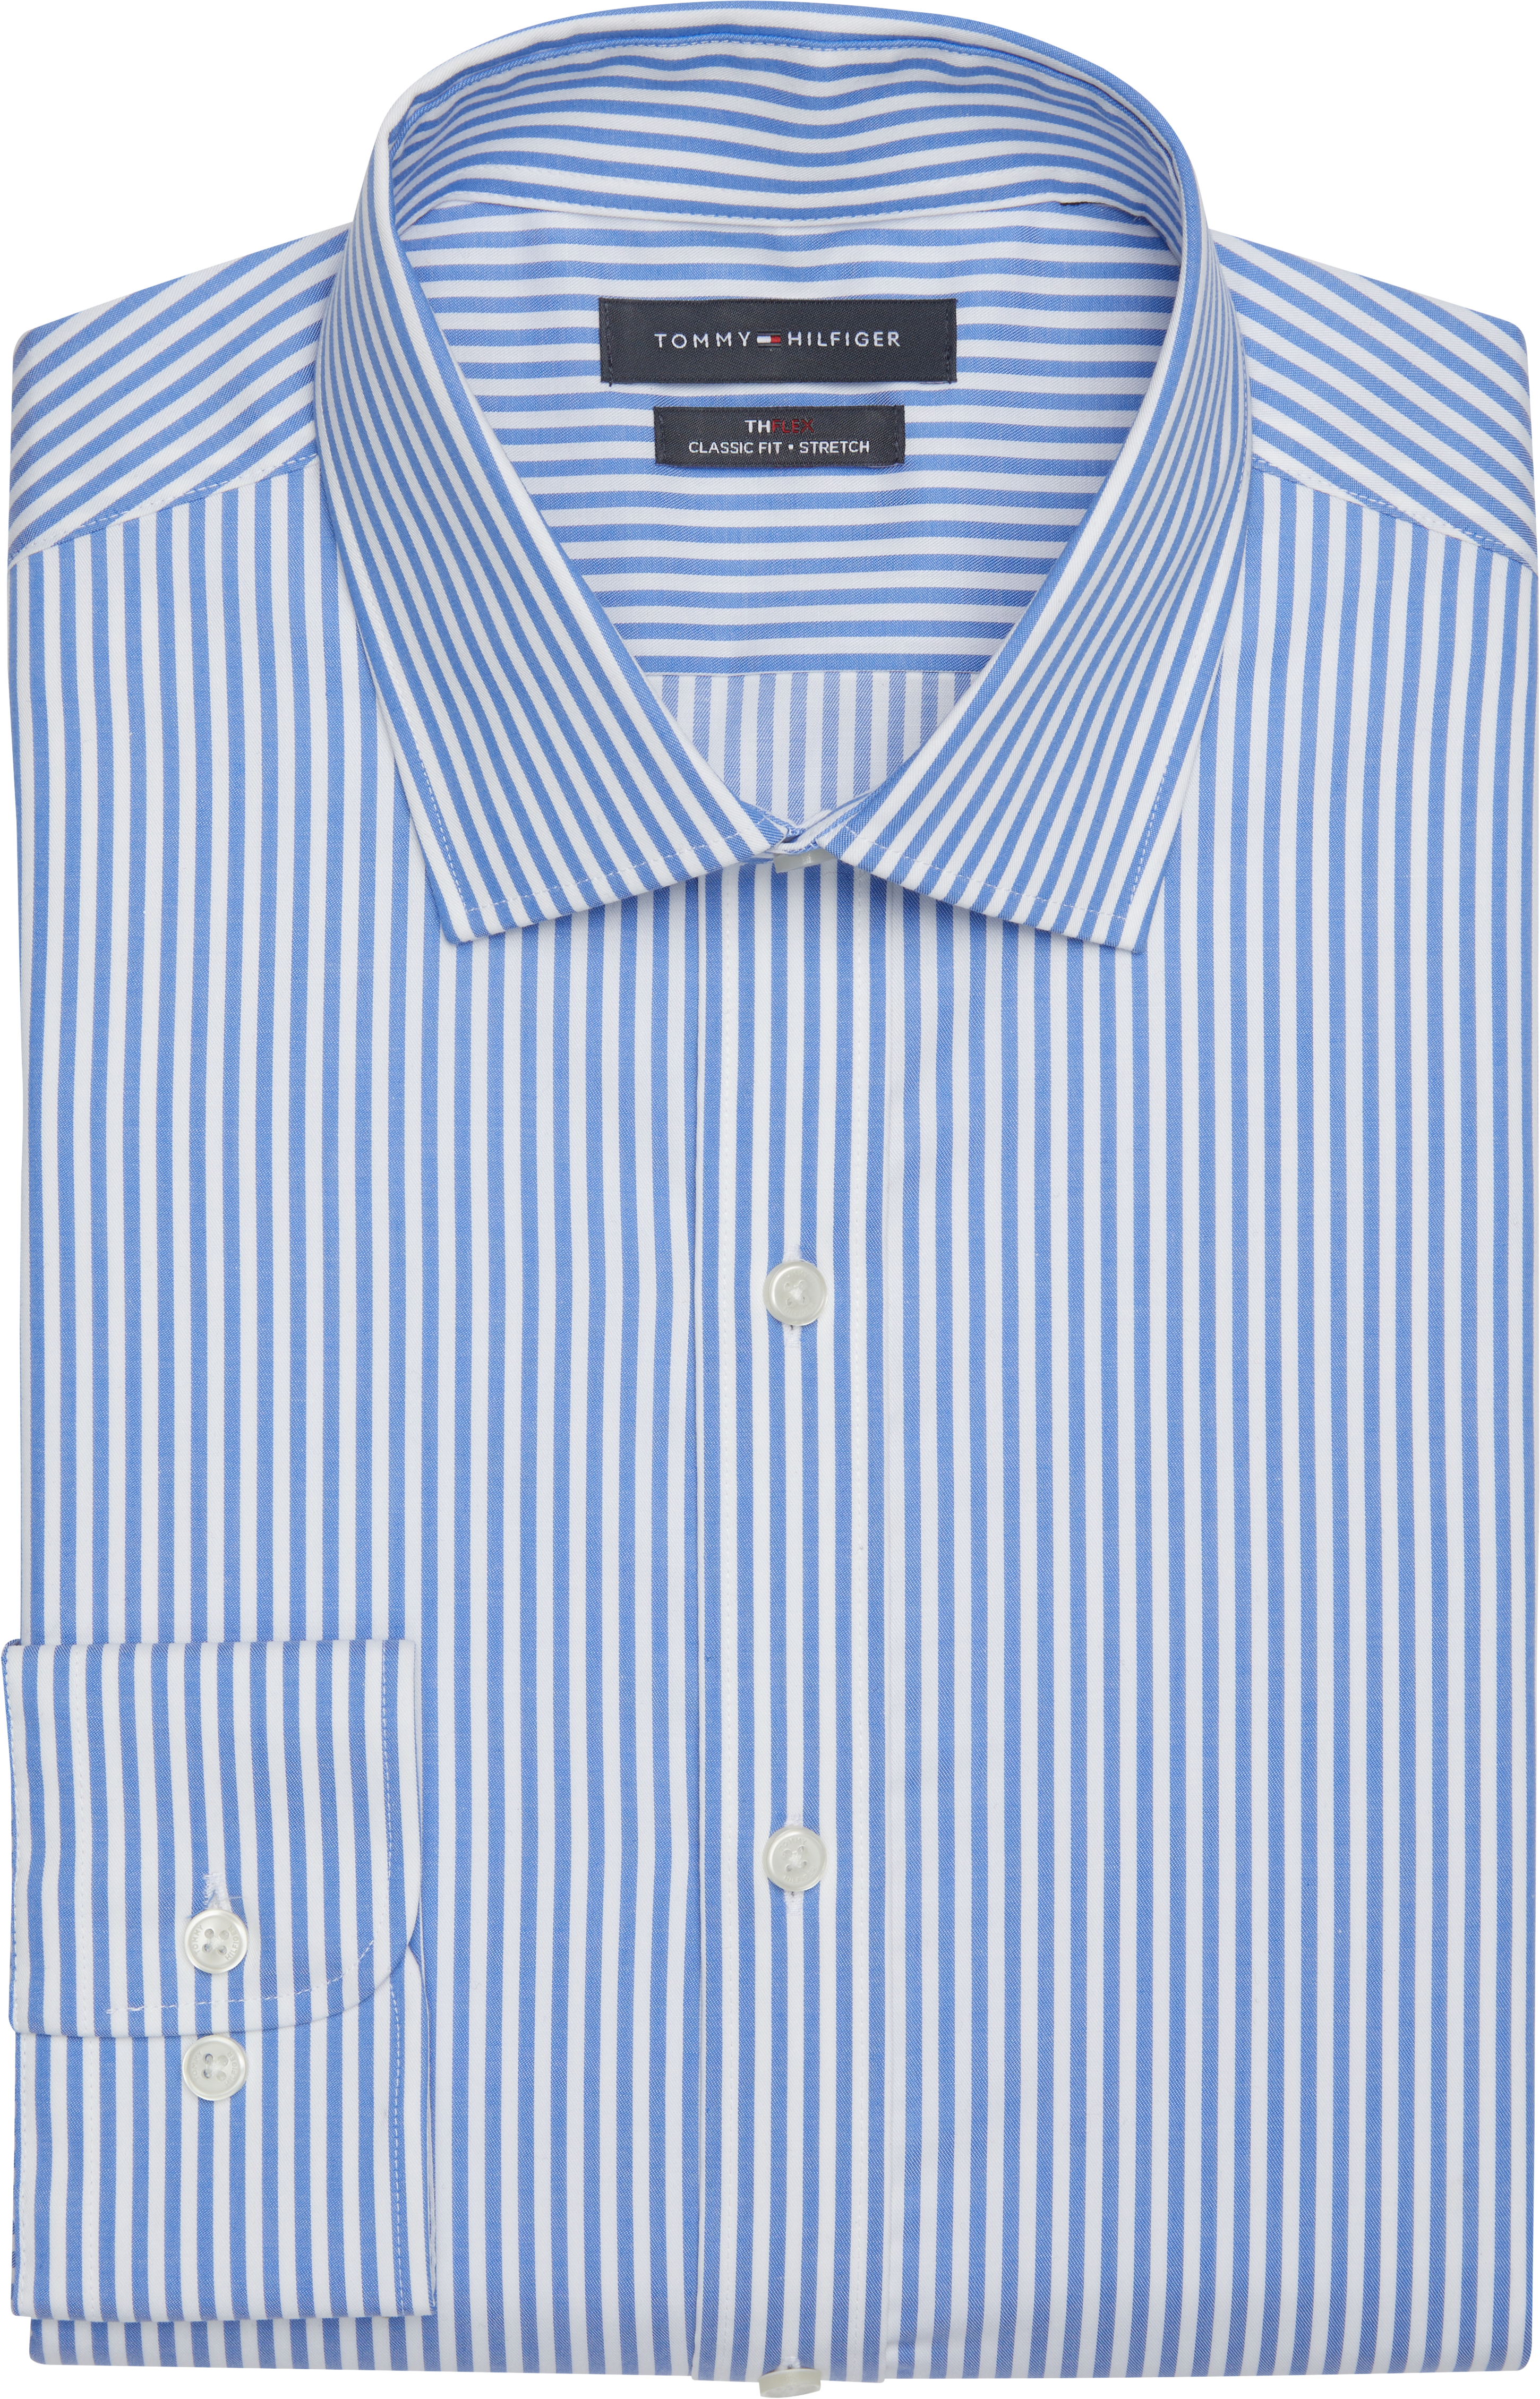 Tommy TH Flex Classic Fit Spread Collar Dress Shirt, Blue Stripe - Men's Shirts | Men's